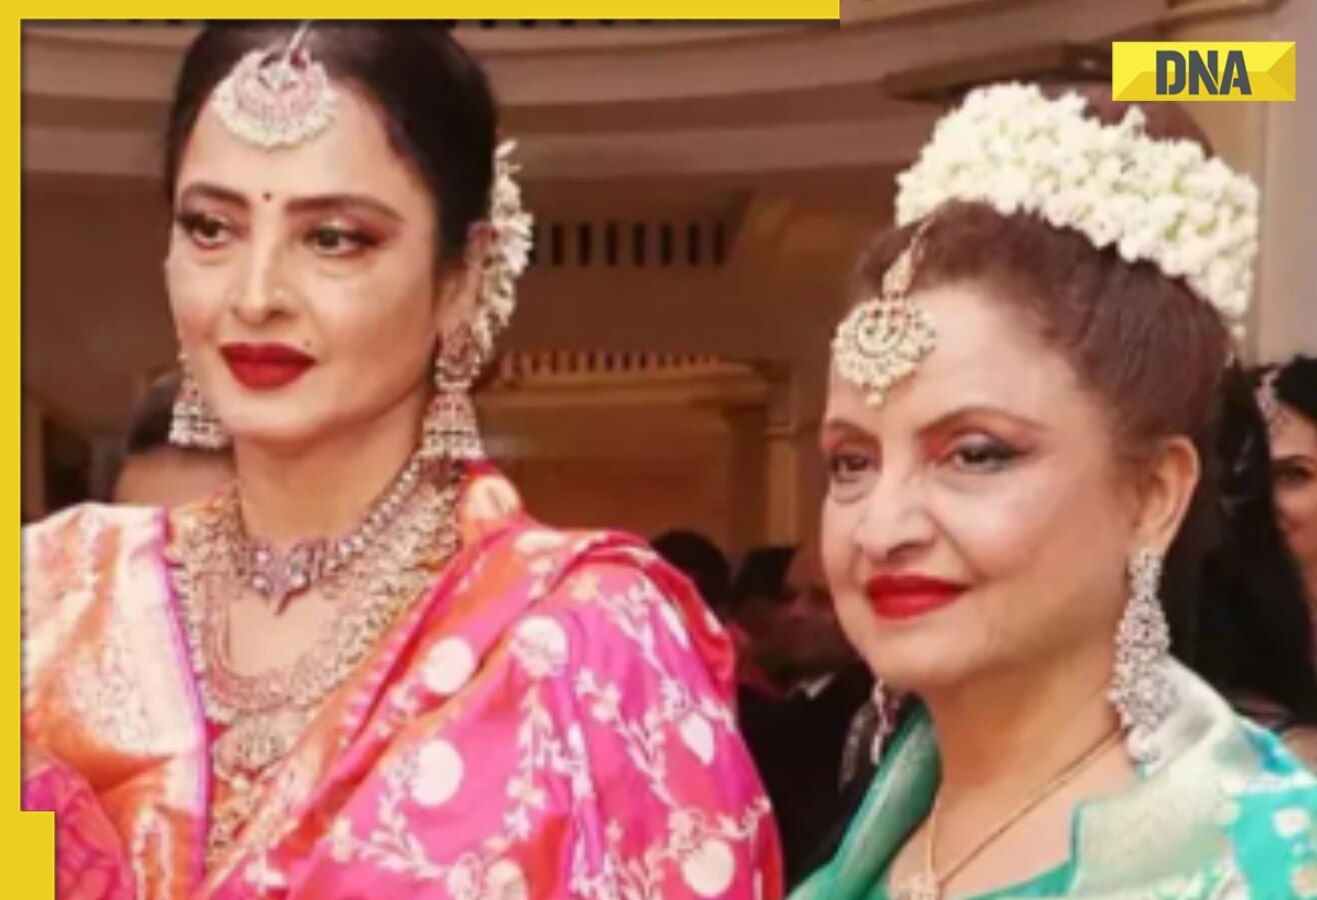 Ahead of Bollywood's original diva Rekha's birthday, we recreate her iconic  looks on Anindita Bose